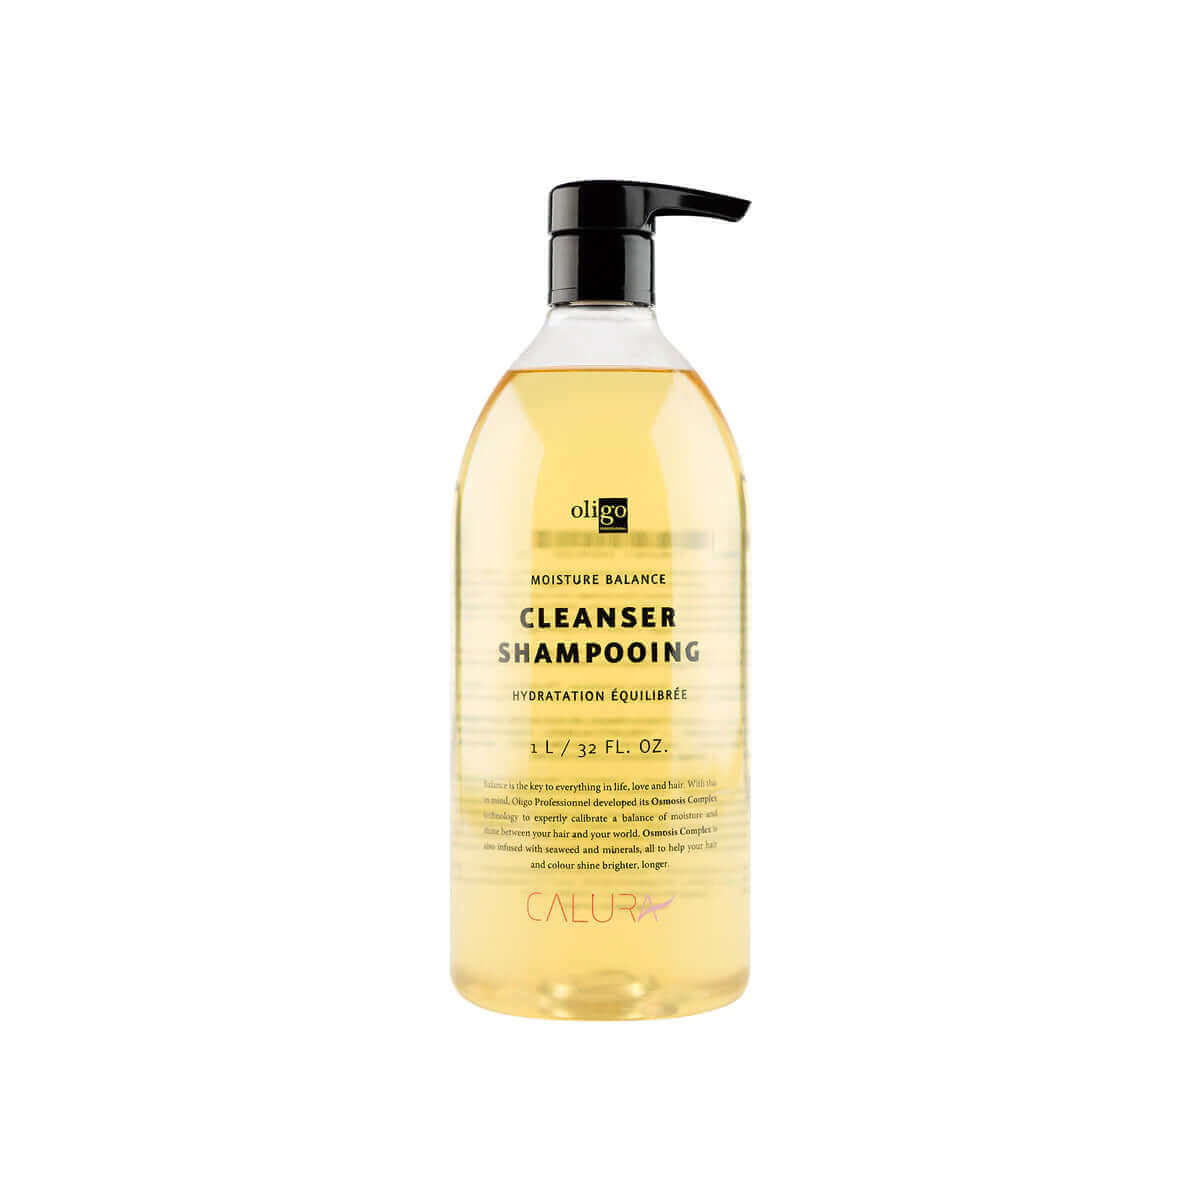 Oligo Moisture Balance Cleanser / Shampoo a Shampoo from Simply Colour Hair Salon Studio & Online Store